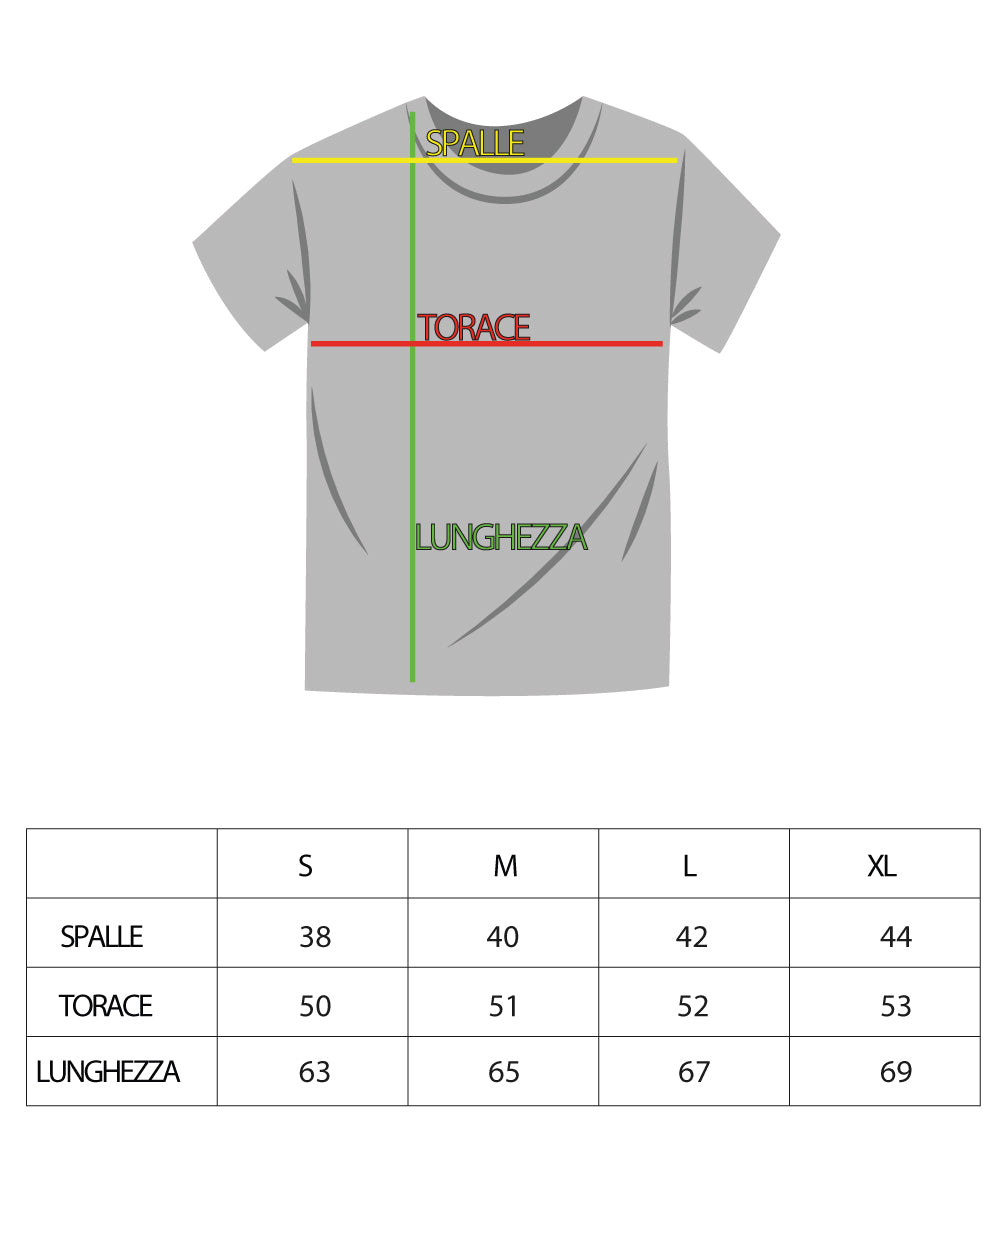 Men's Polo Invicta Piquet Logo Casual Collar Buttons Military Green T-shirt GIOSAL